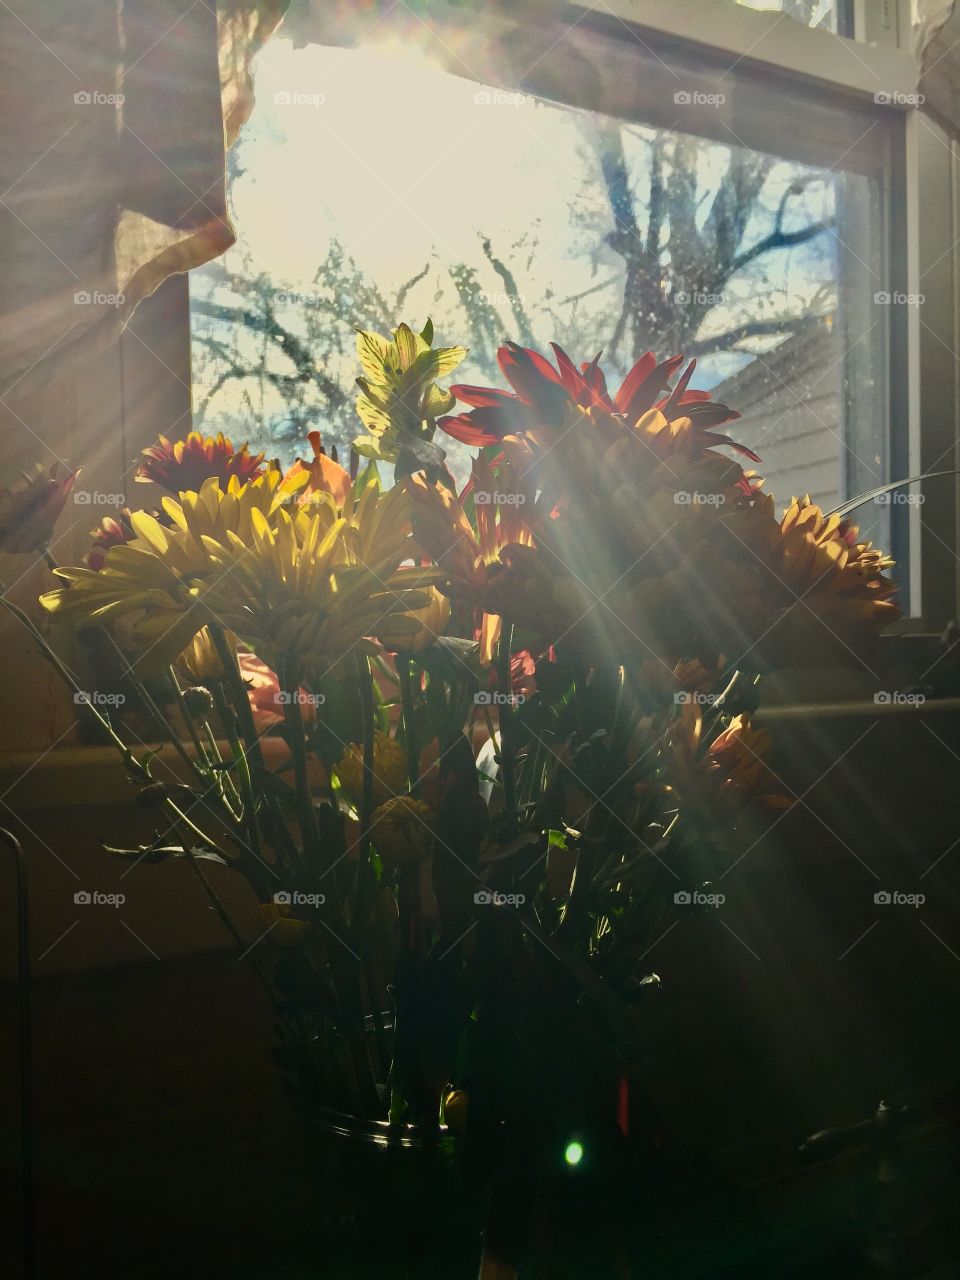 Sunlight through the flowers 